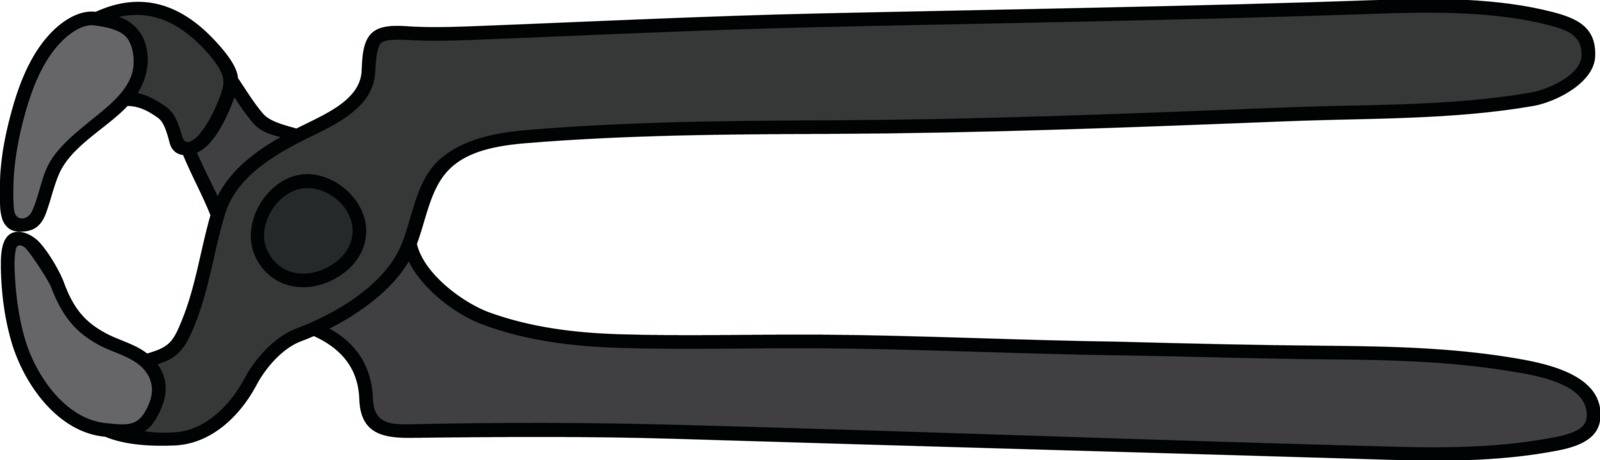 The black splitting pliers by vostal